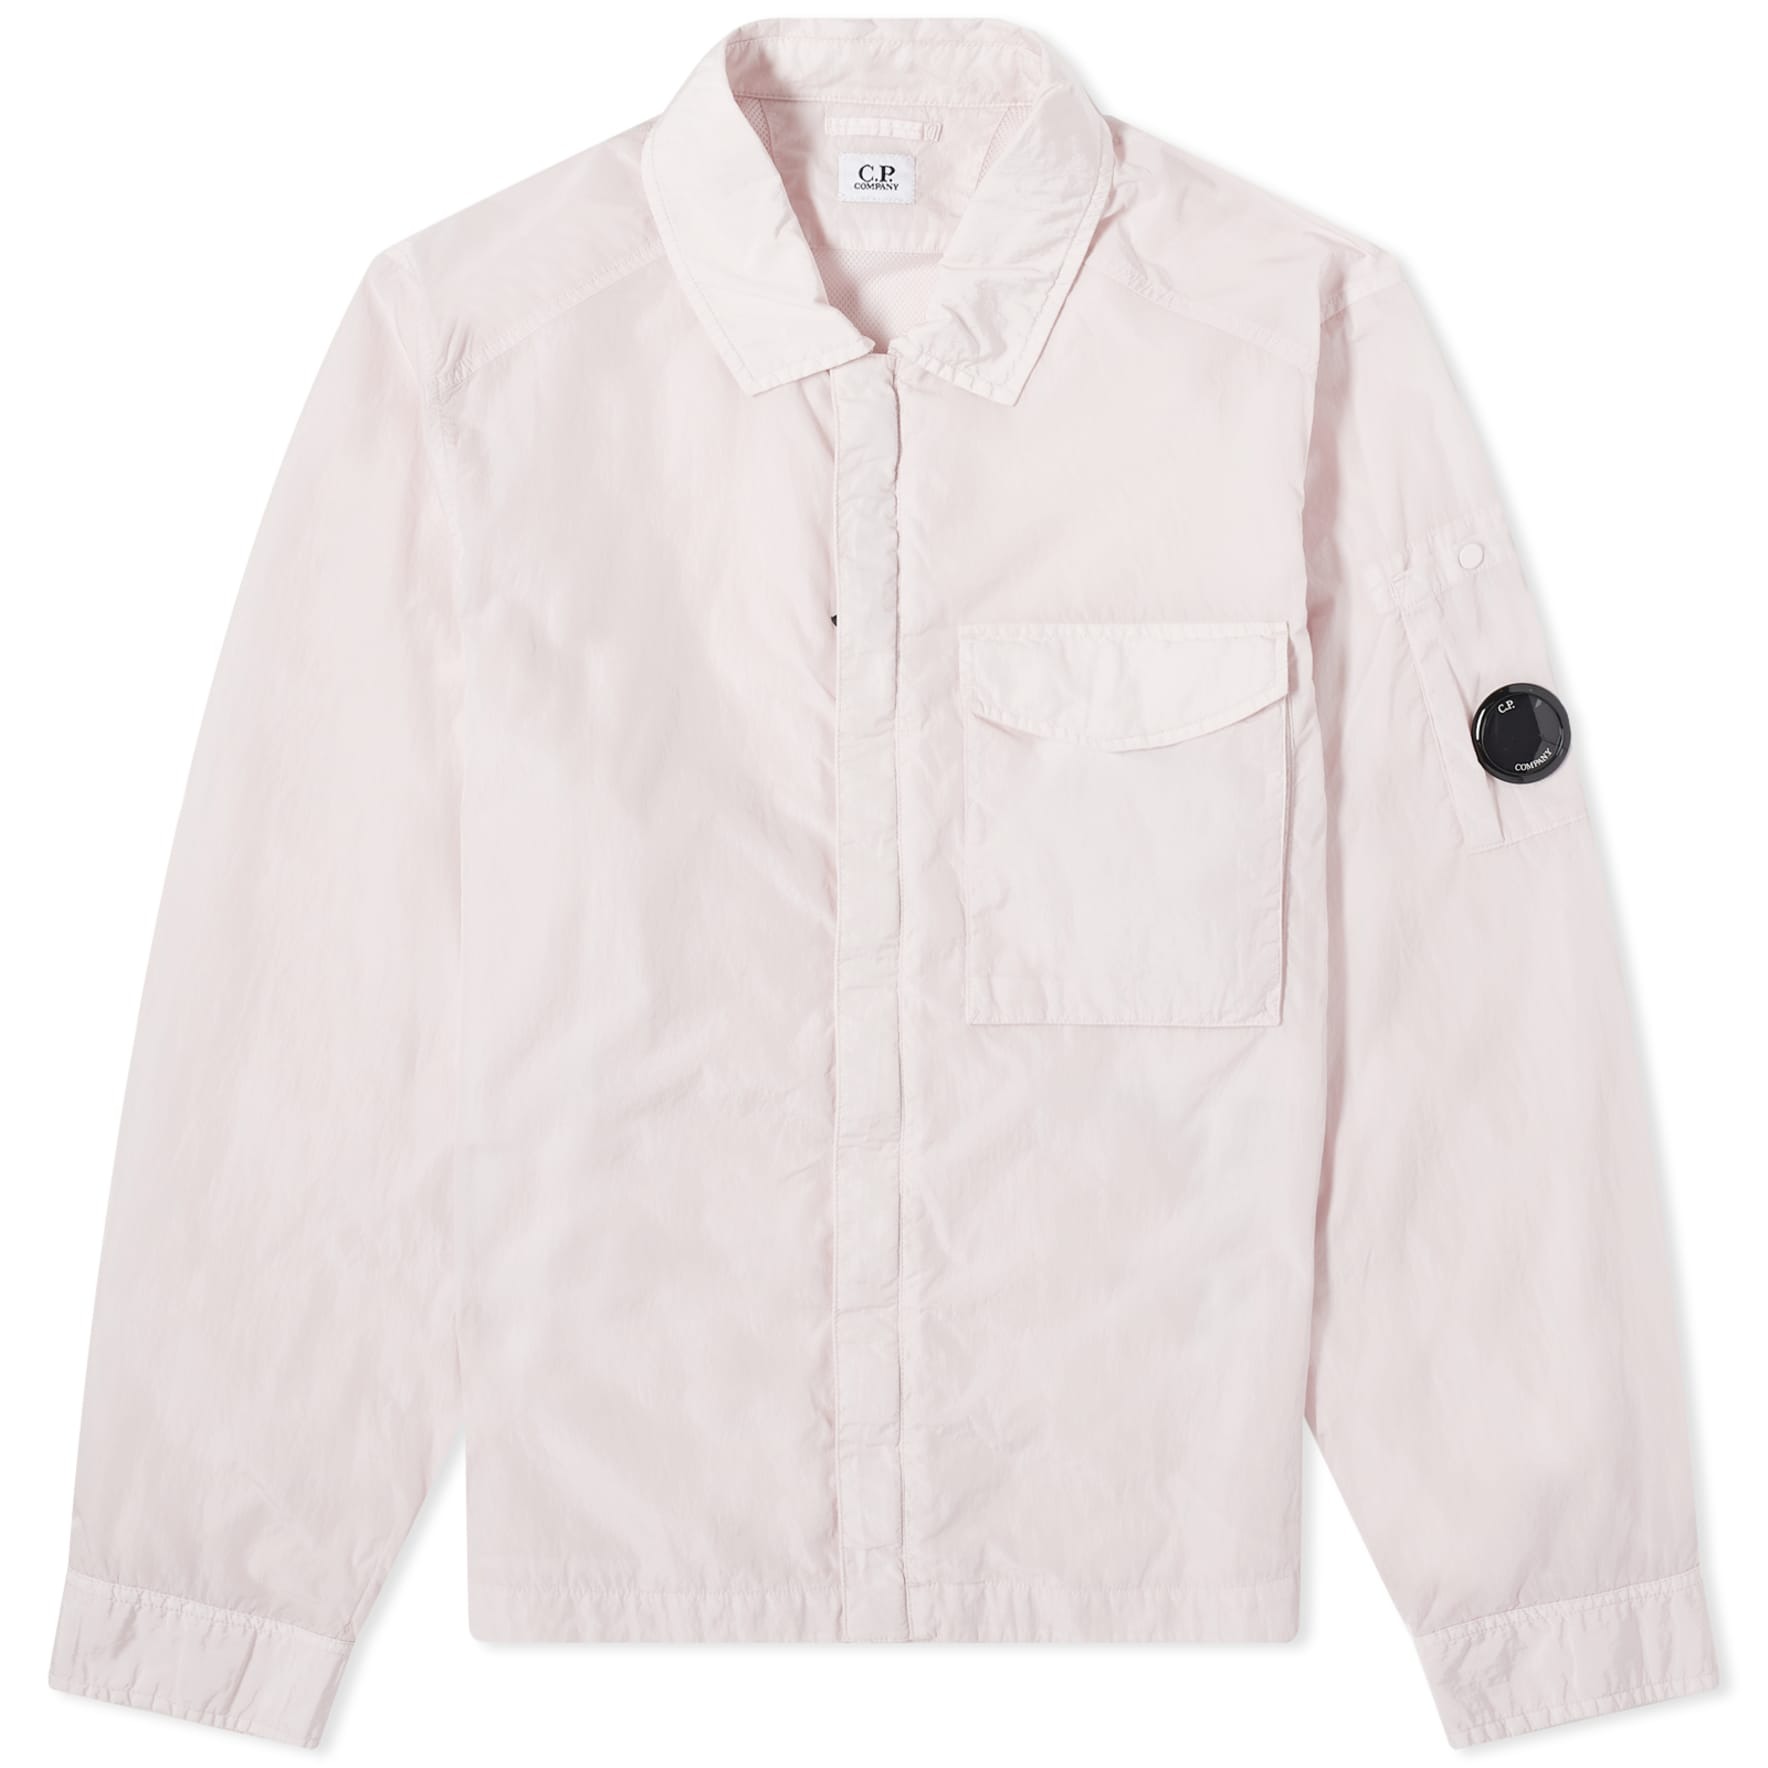 Куртка-рубашка C.P. Company Chrome-R Pocket, бледно-розовый куртка рубашка c p company chrome r pocket черный